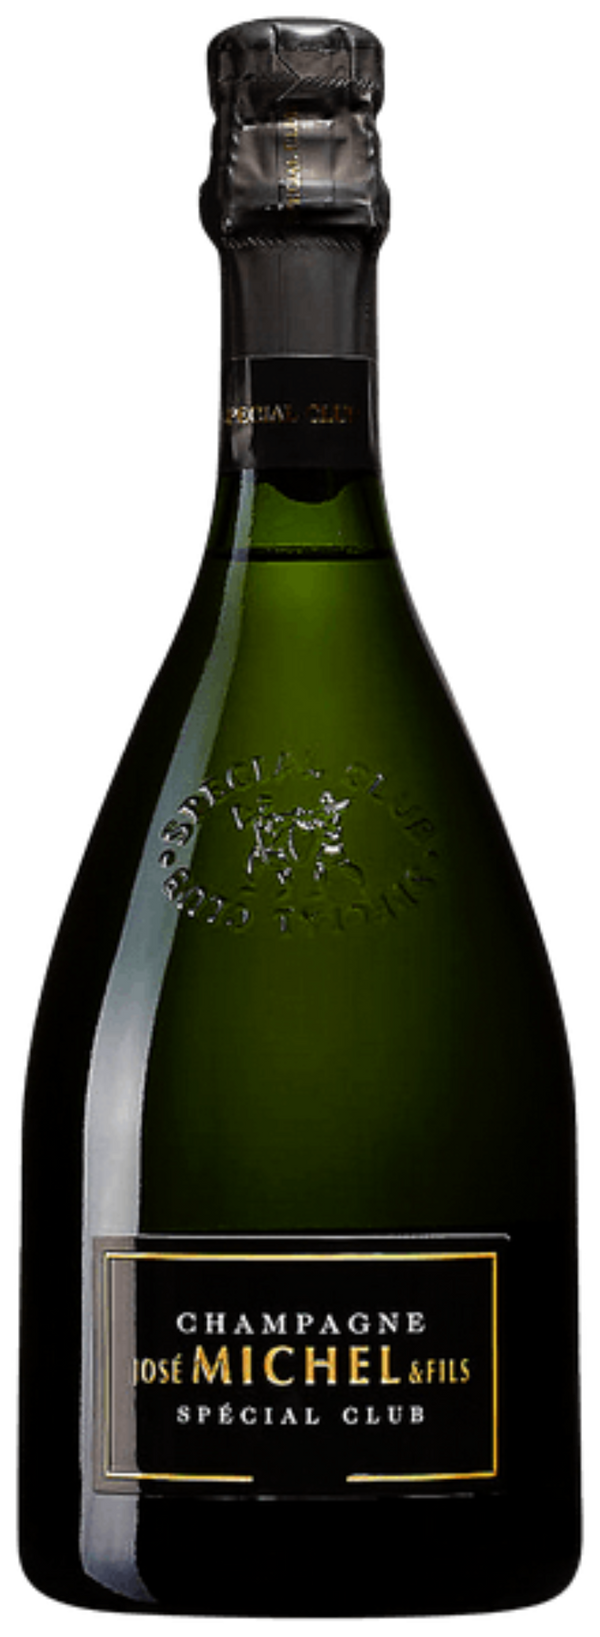 Champagne Jose Michel et Fils Special Club 2014